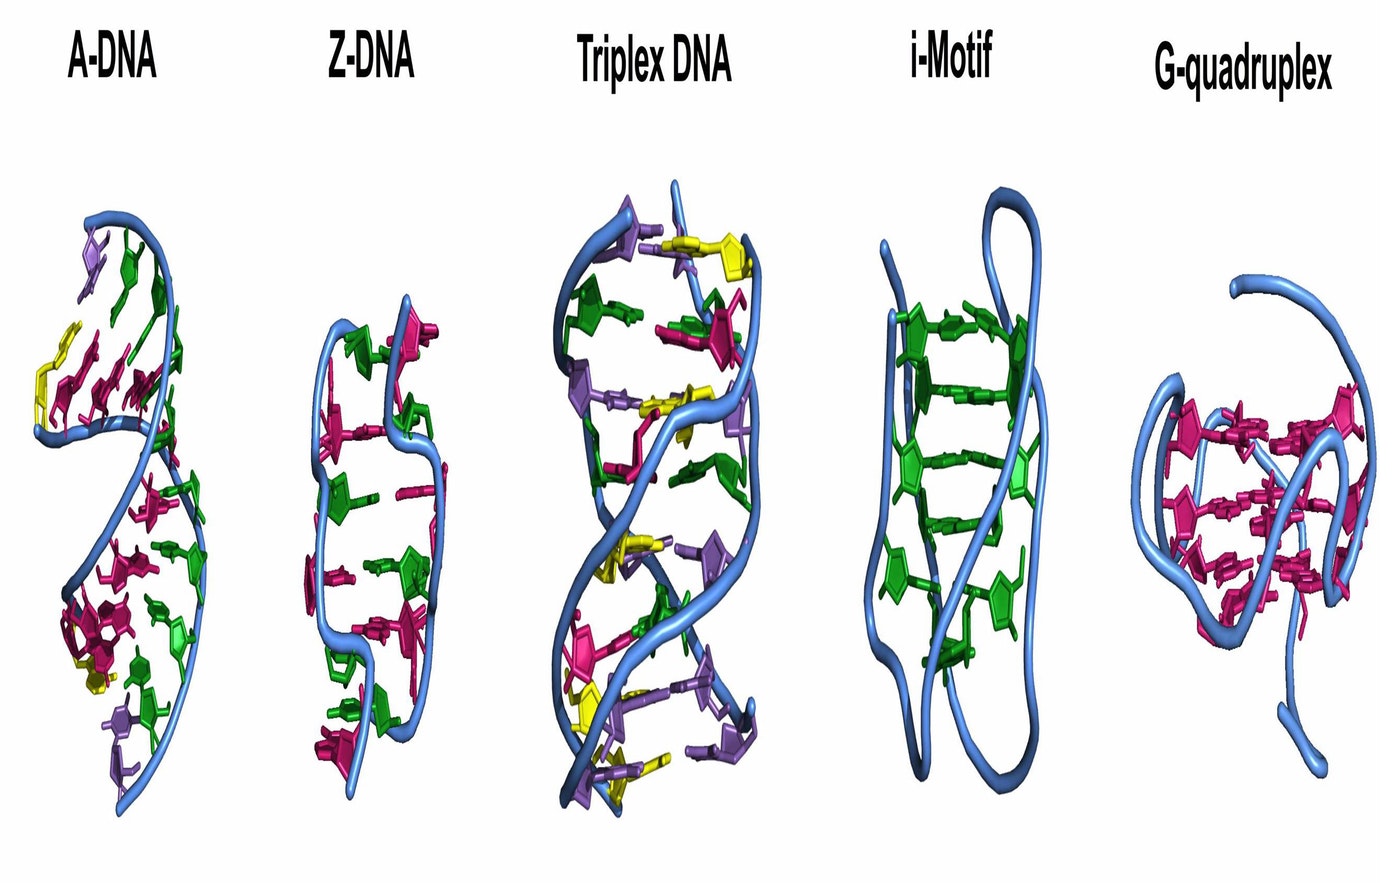 [:es] Helix no more. Researchers find a new DNA shape[:]